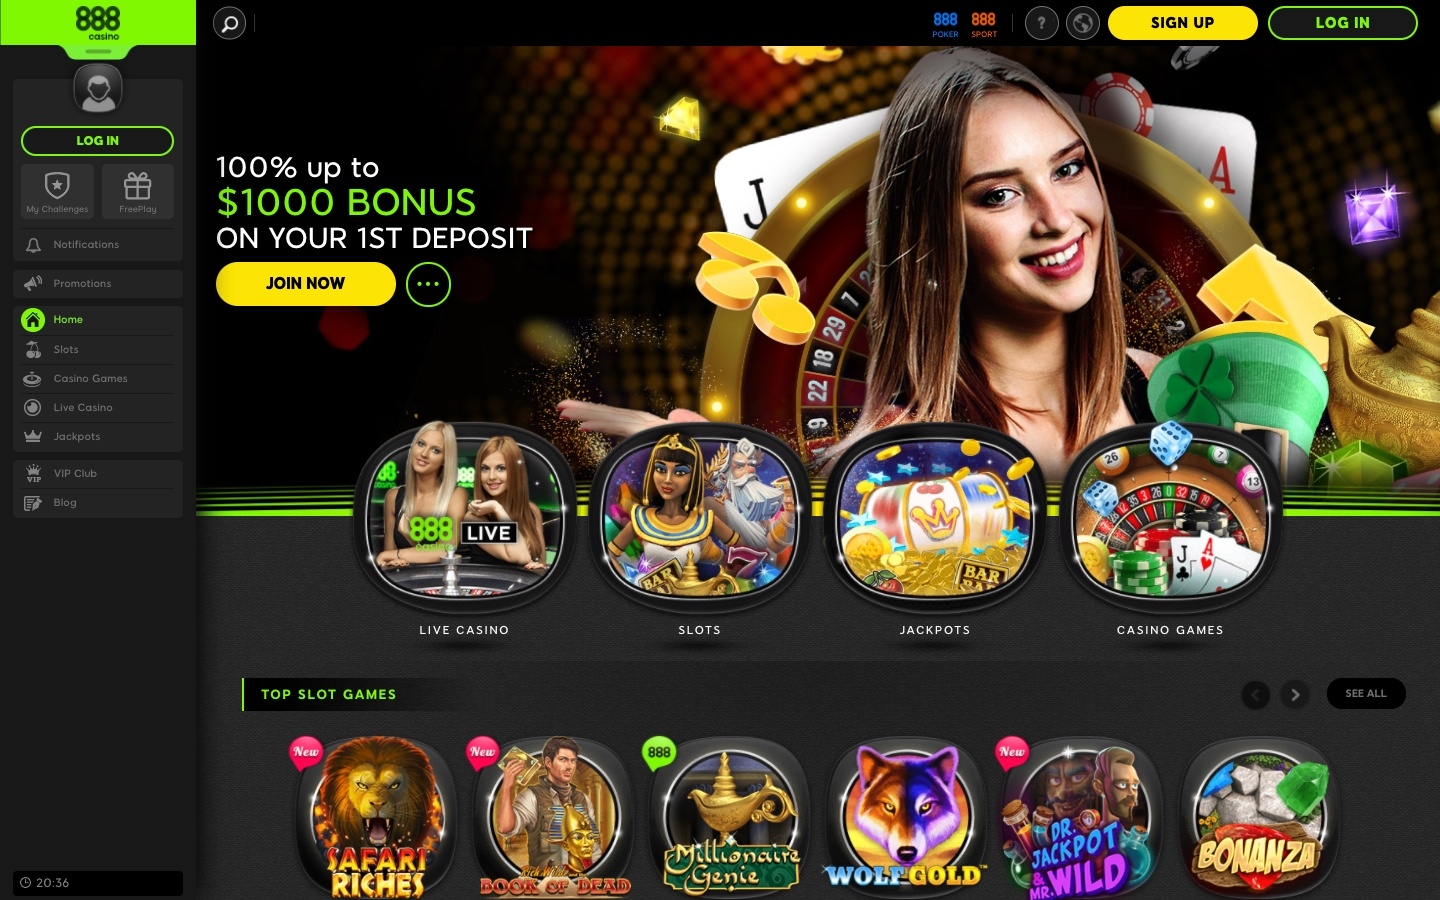 888 casino online казино россии rating casino ru win